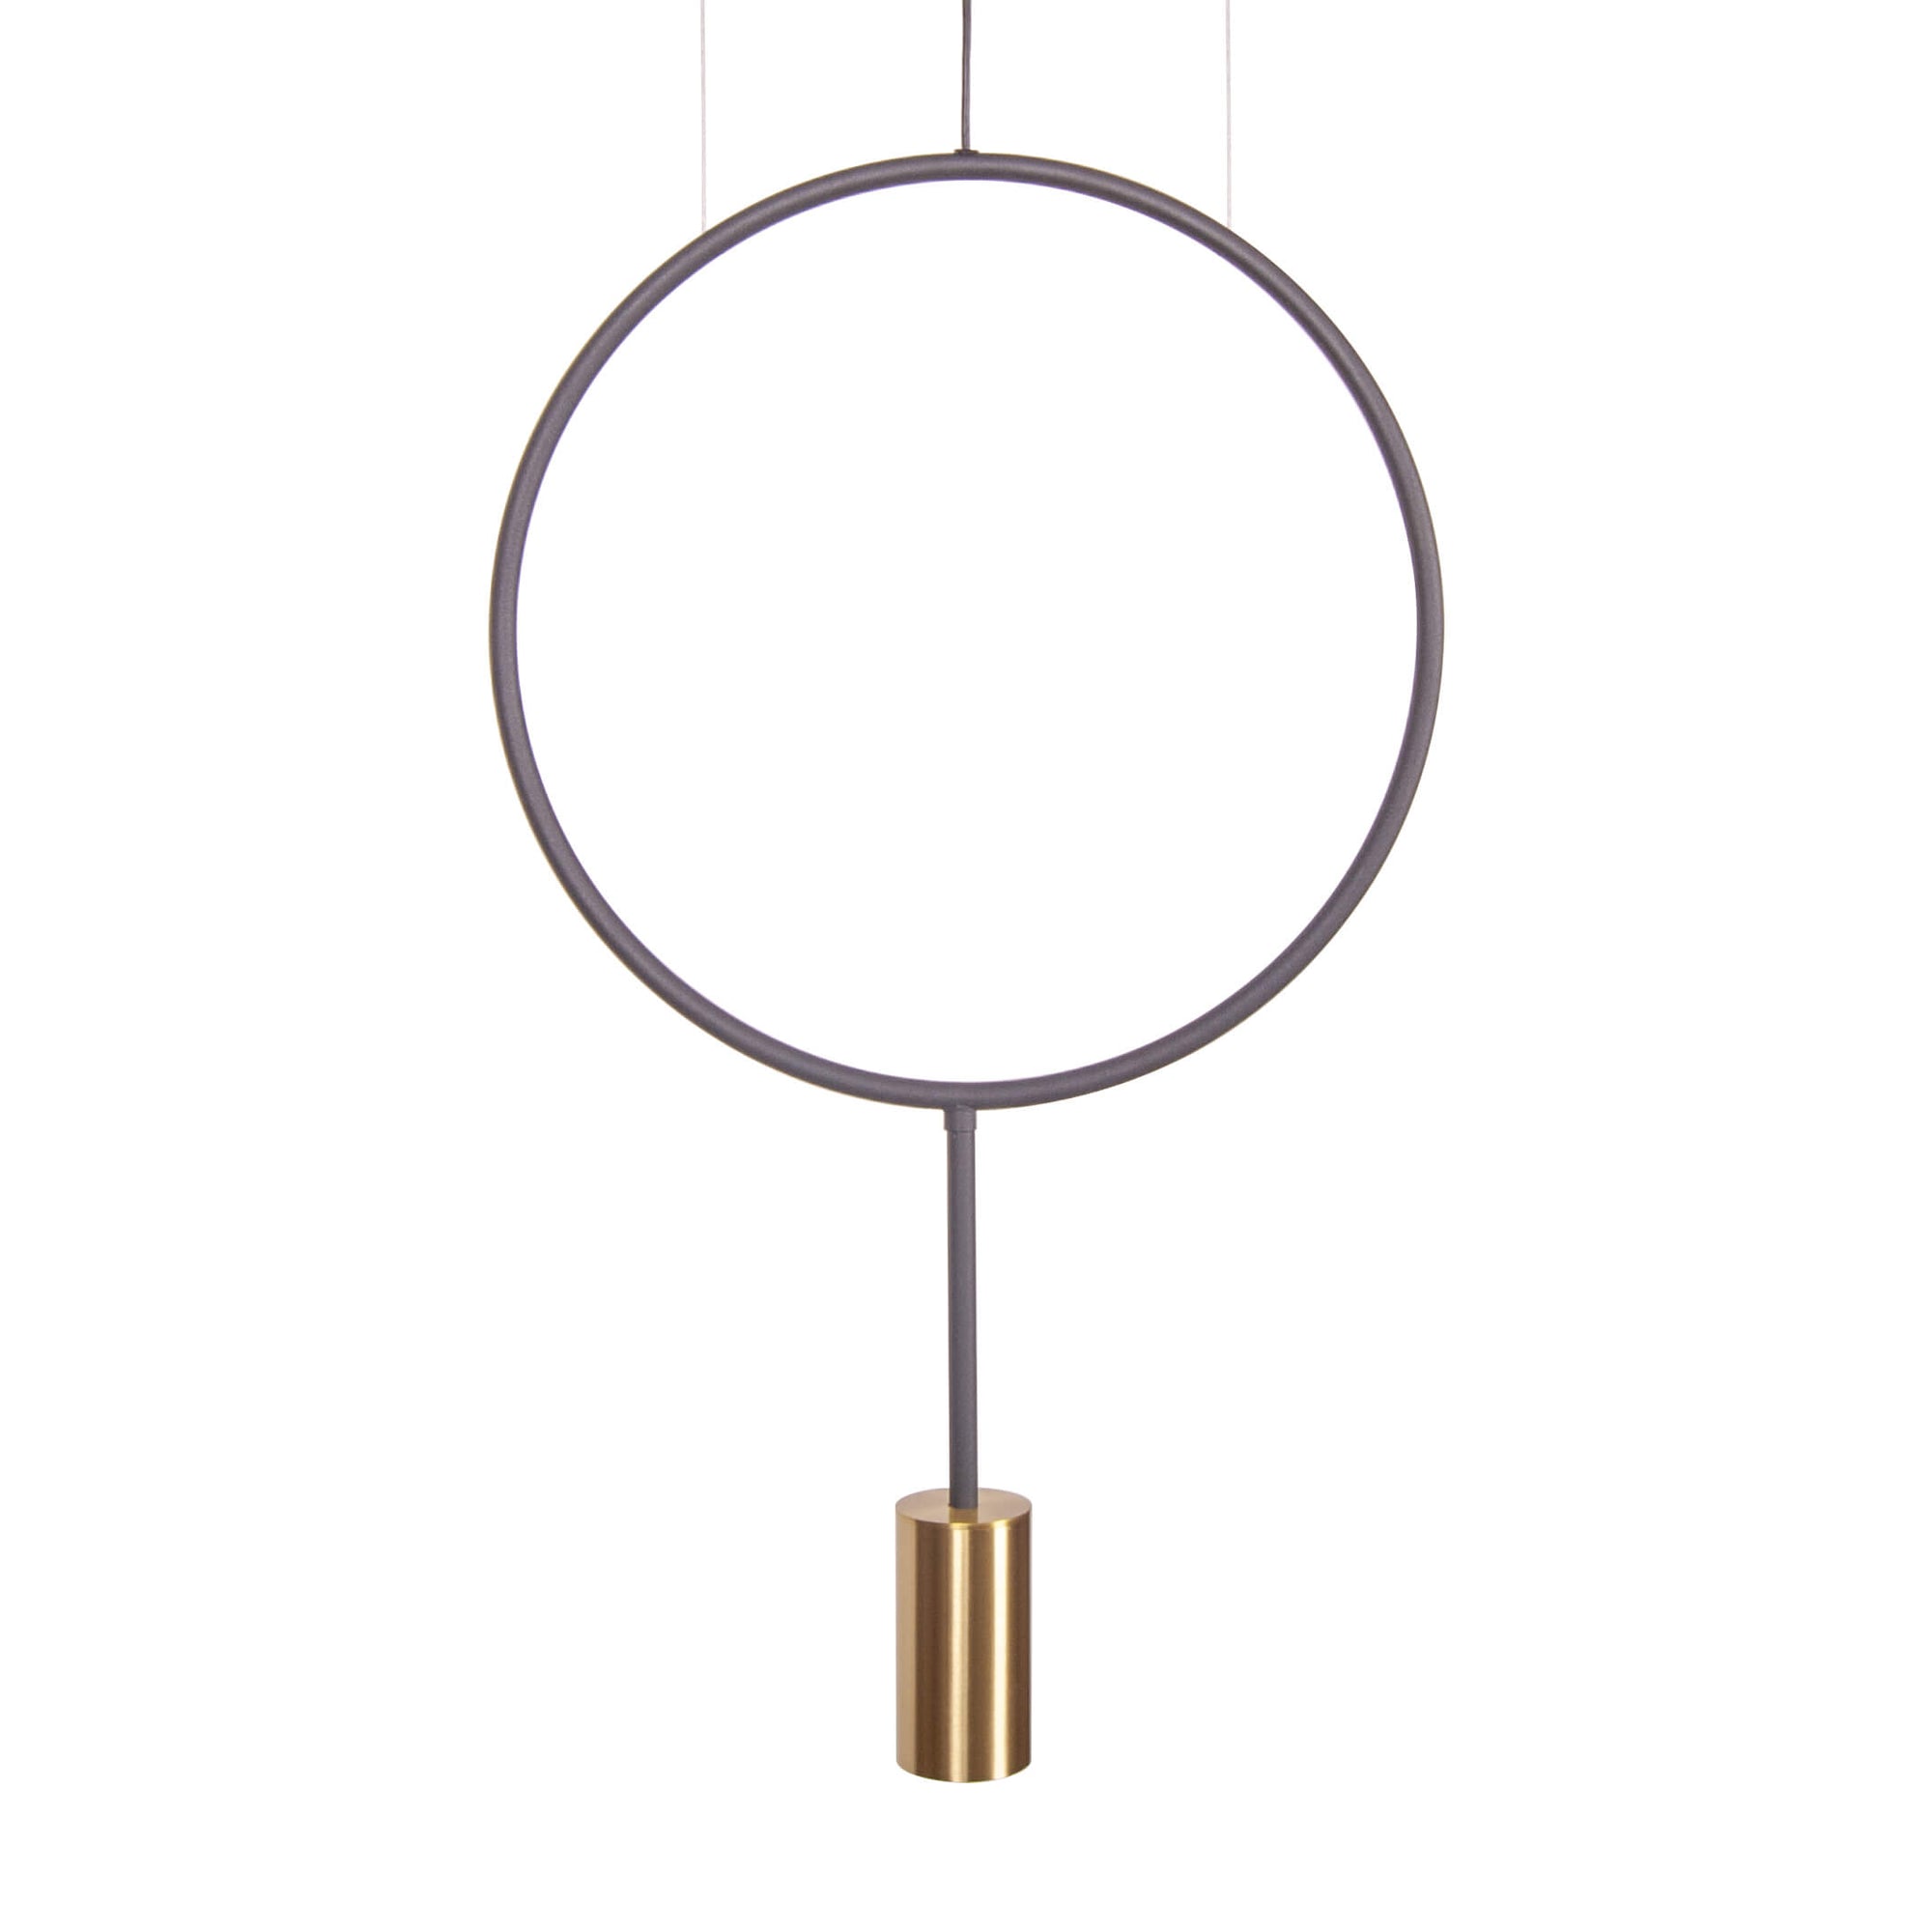 Pendul GISELLE SR1 – Design glam, chic, modern, Corp de iluminat din metal pentru living, dining